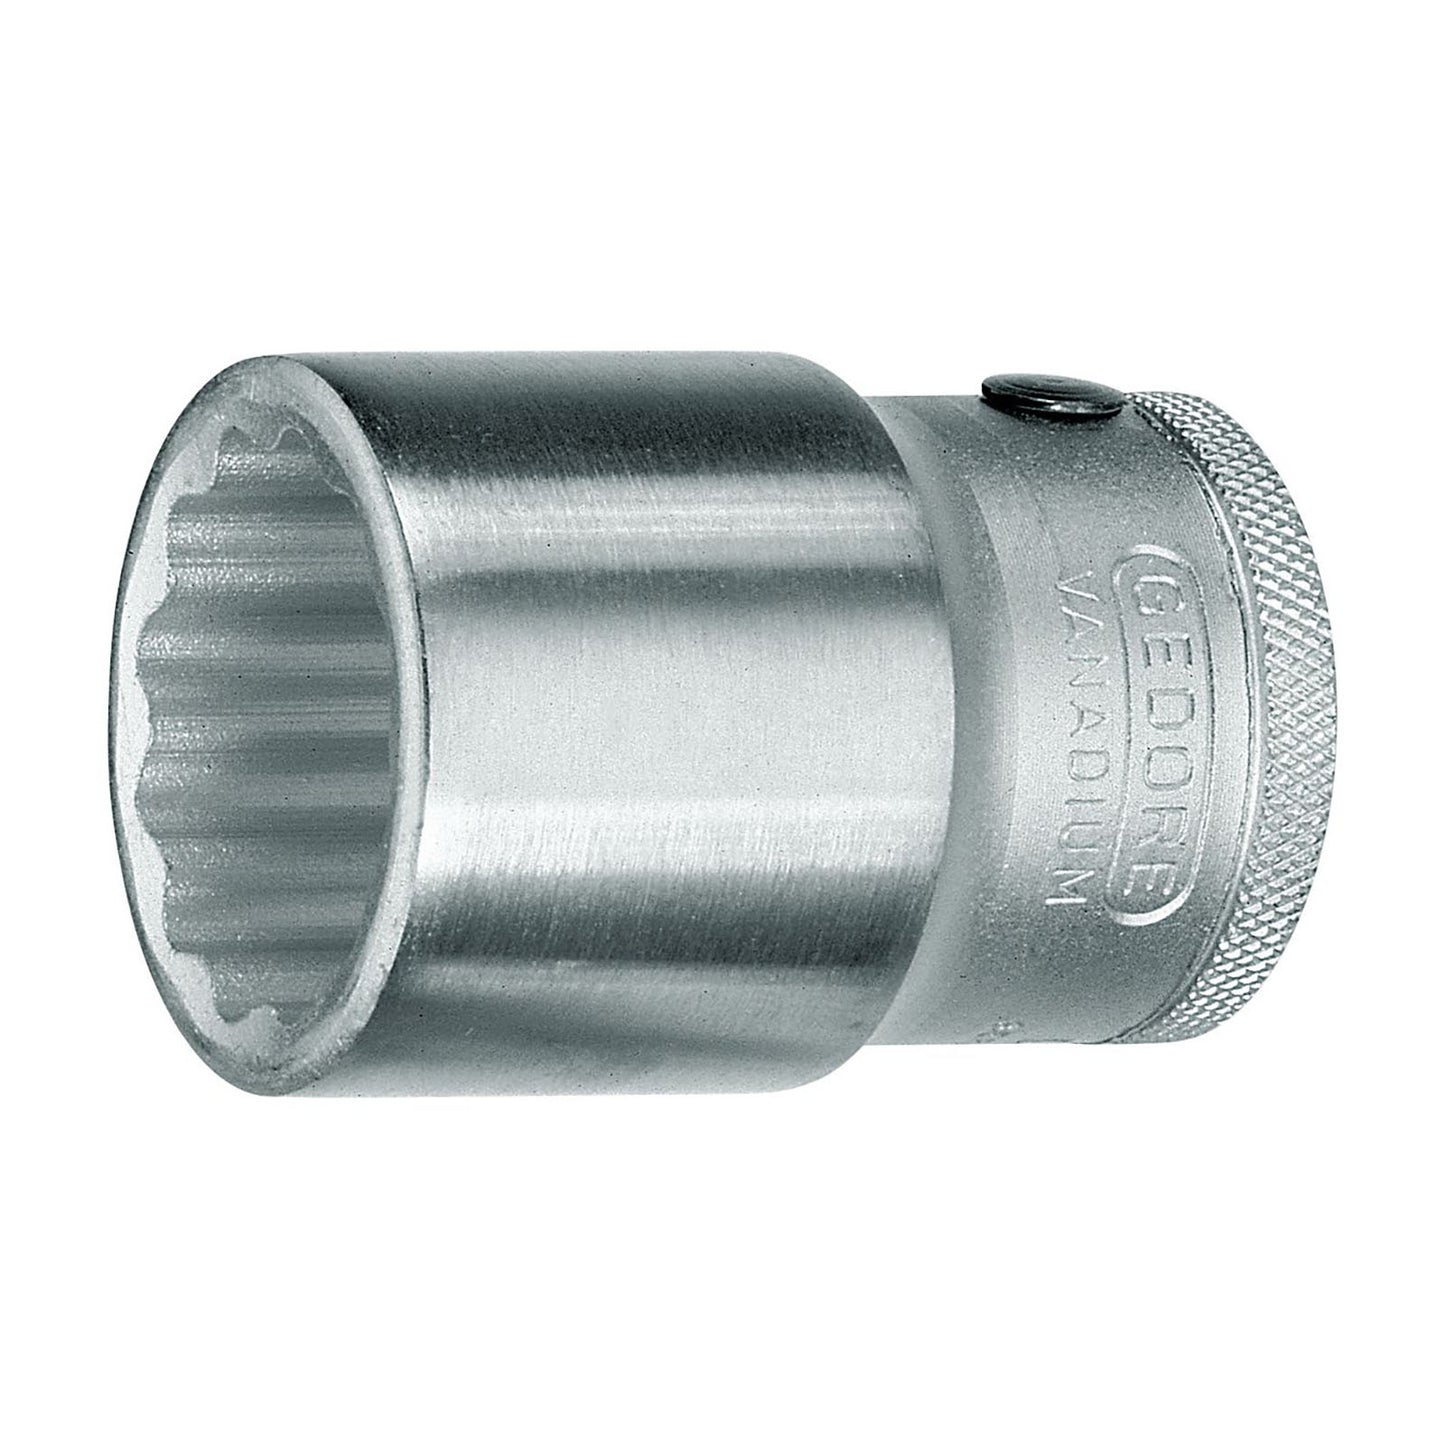 GEDORE D 32 55 - Vaso Unit Drive 3/4", 55 mm (6273480)